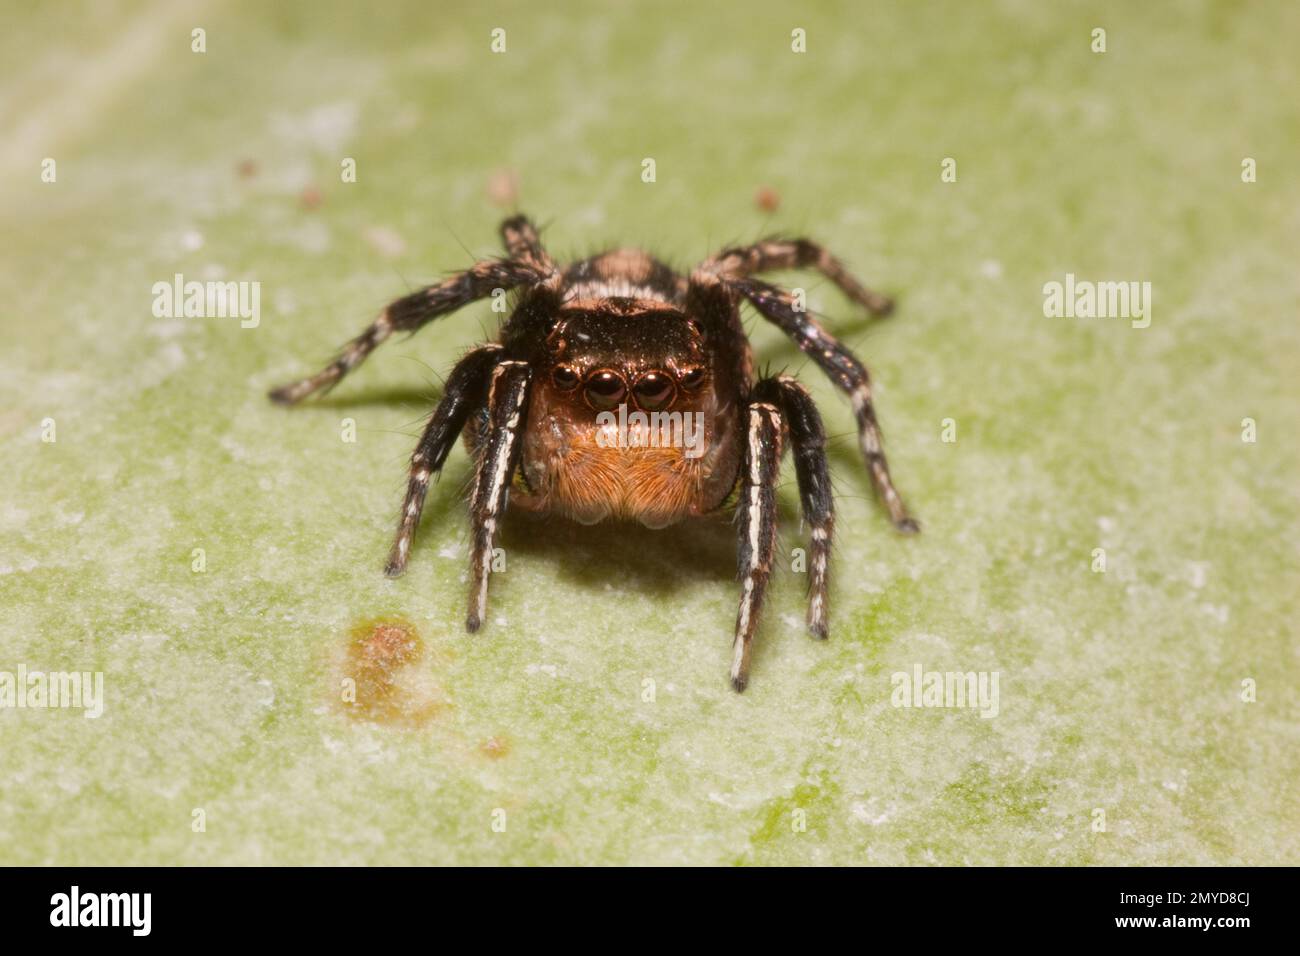 Jumping Spider male, Habronattus hallani, Salticidae. Length 5 mm. Stock Photo